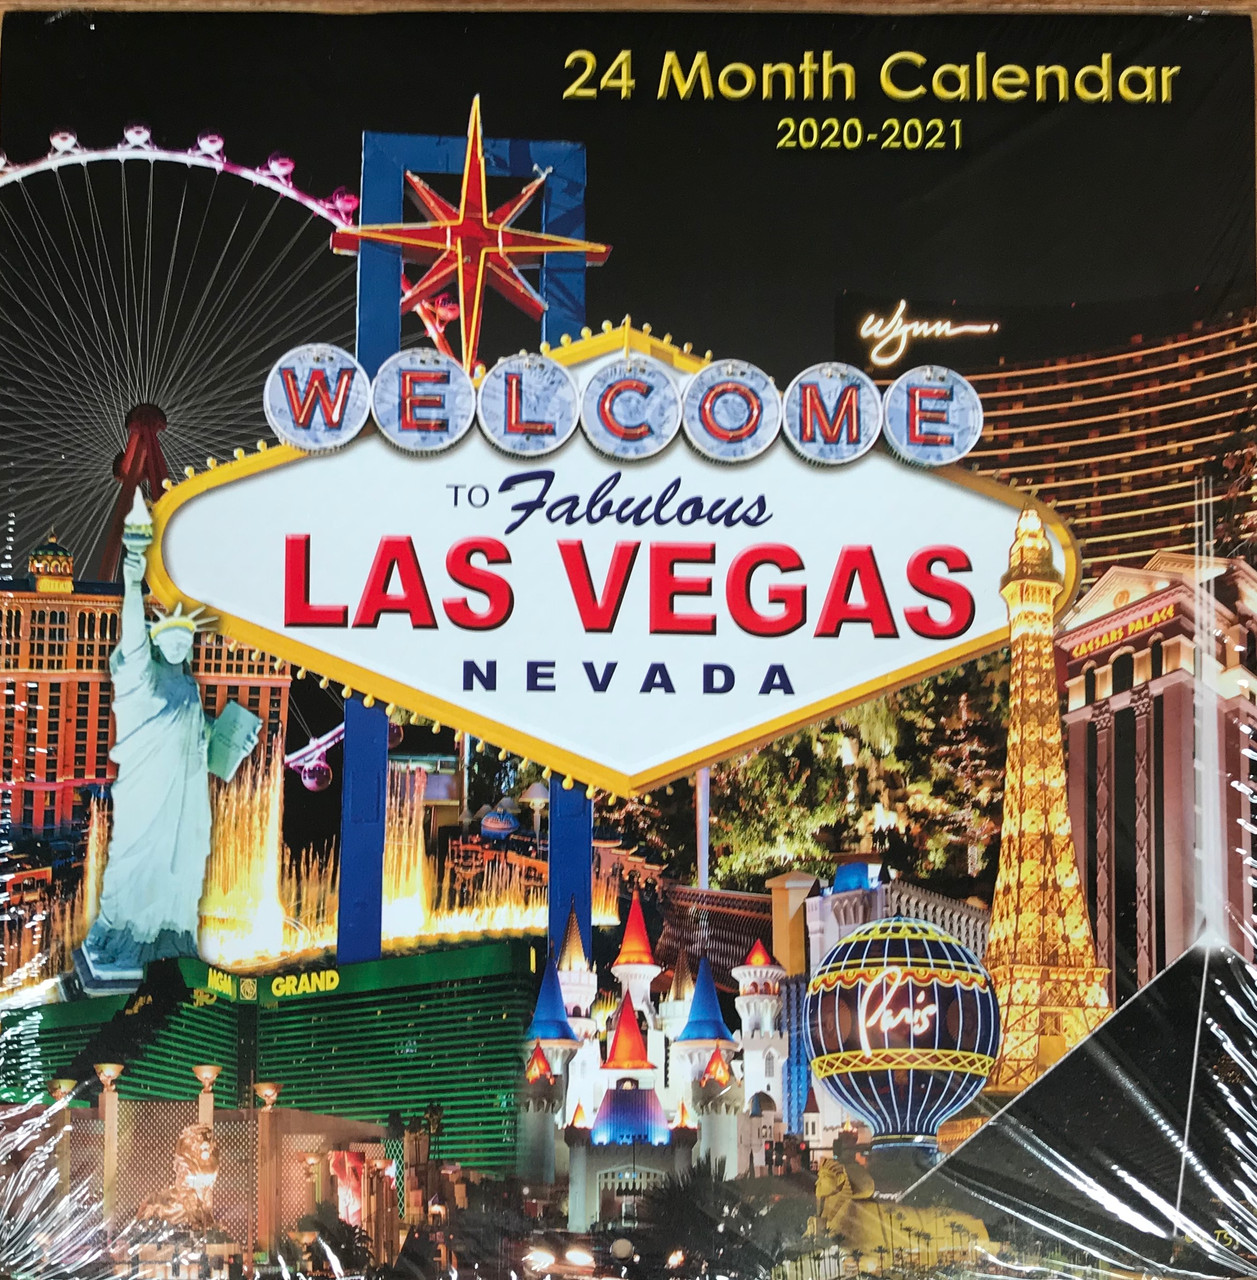 vegas calendar july 2021 2020 2021 24 Month 2 Year Las Vegas Wall Calendar Direct Order Center vegas calendar july 2021